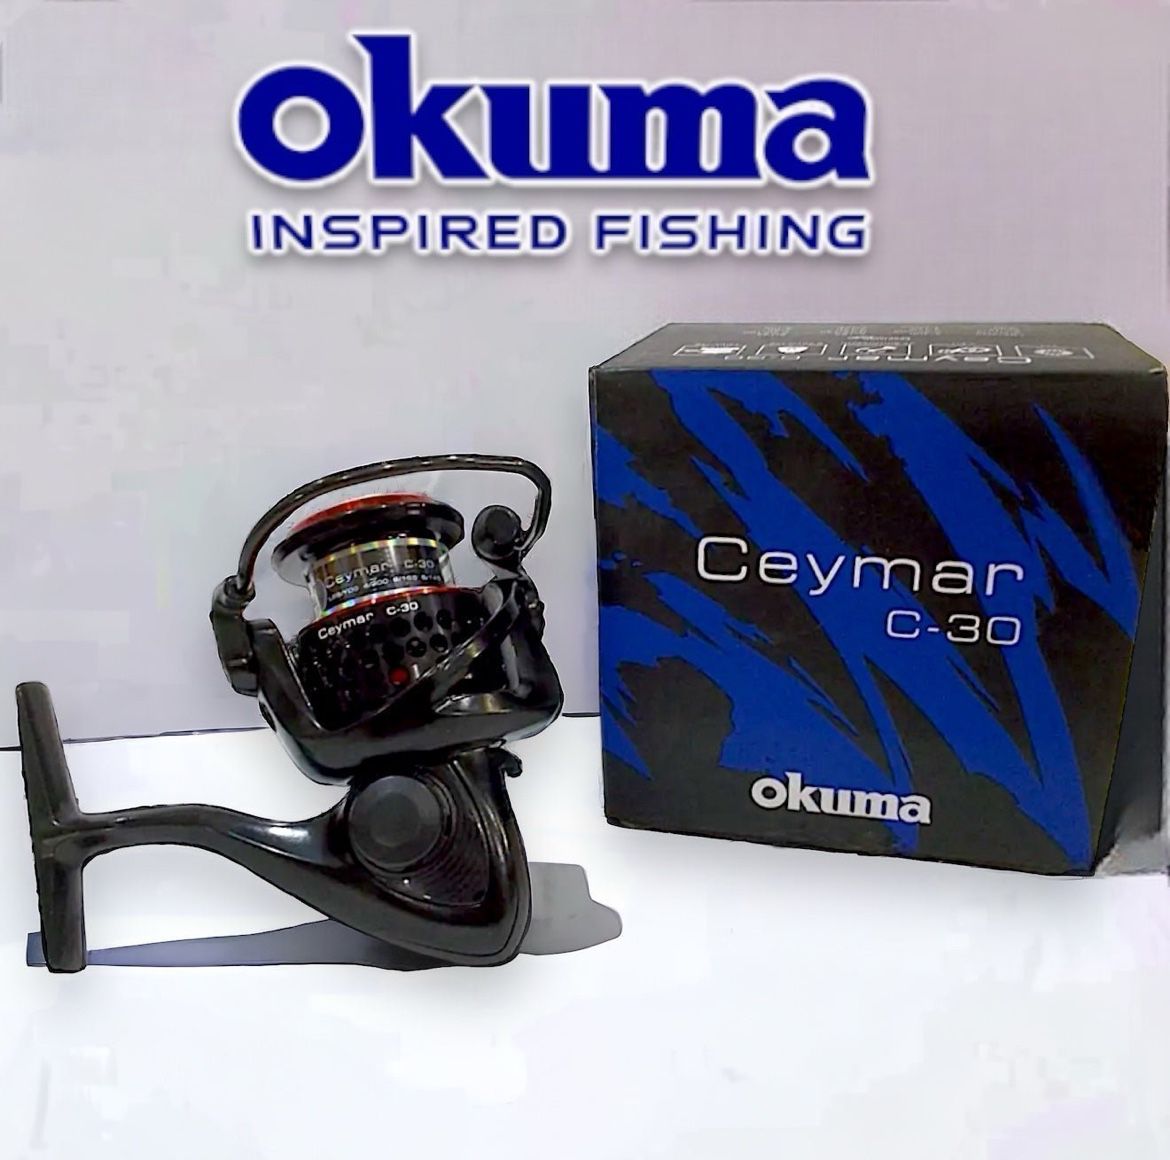 NEW Okuma C-30 Ceymar Graphite Lightweight All Purpose 8BB Spinning Reel For Fishing Rod 